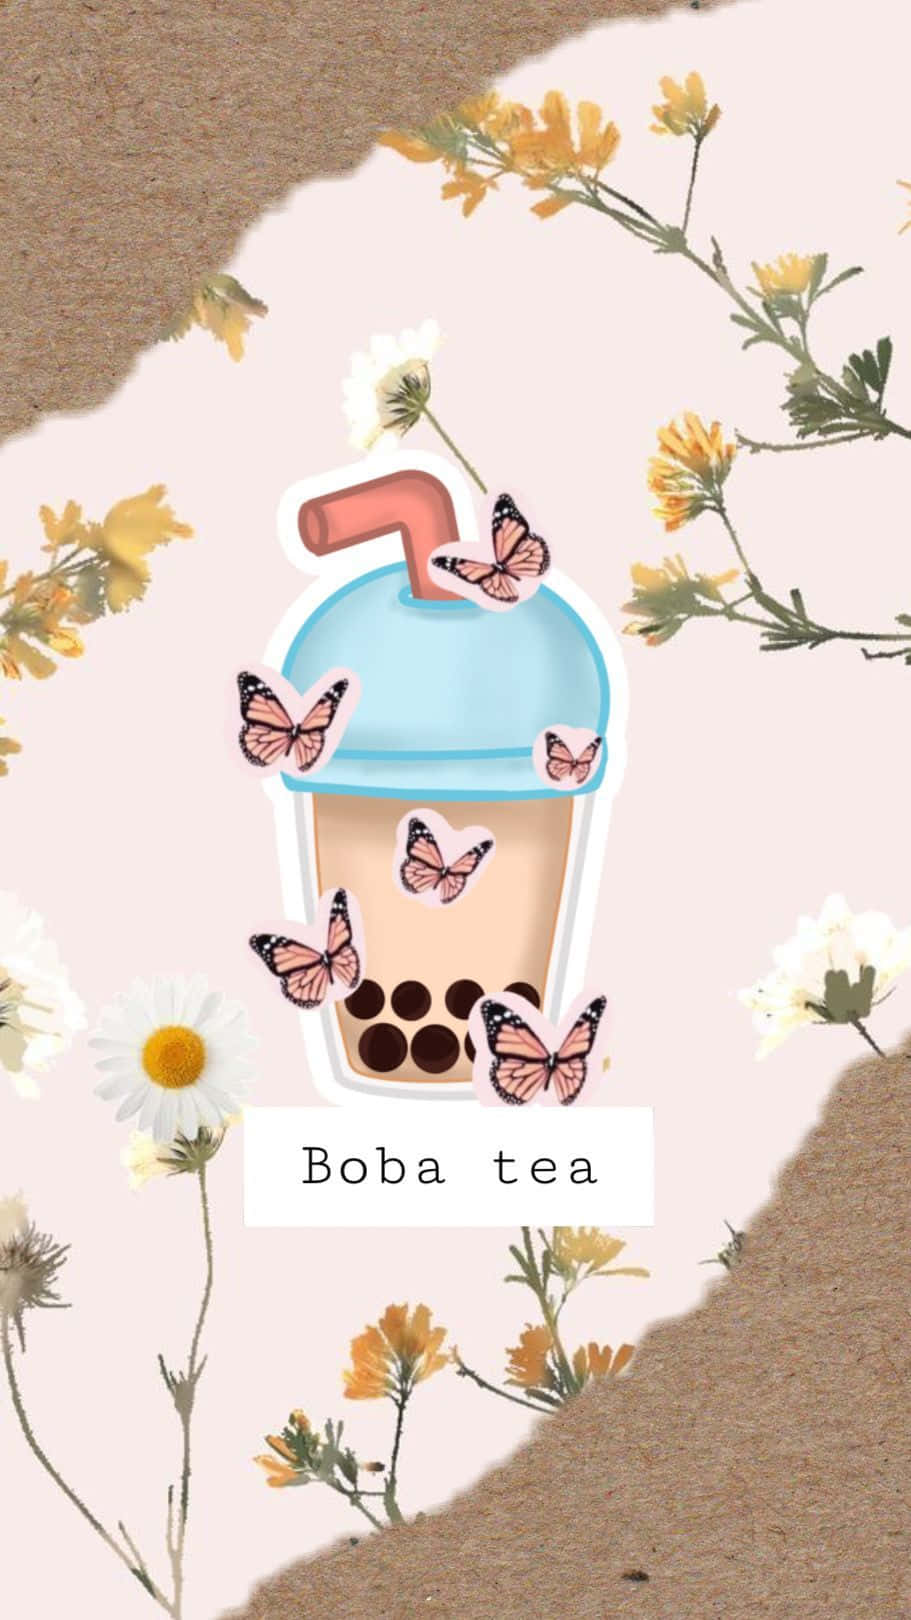 "The perfect treat - Boba!"